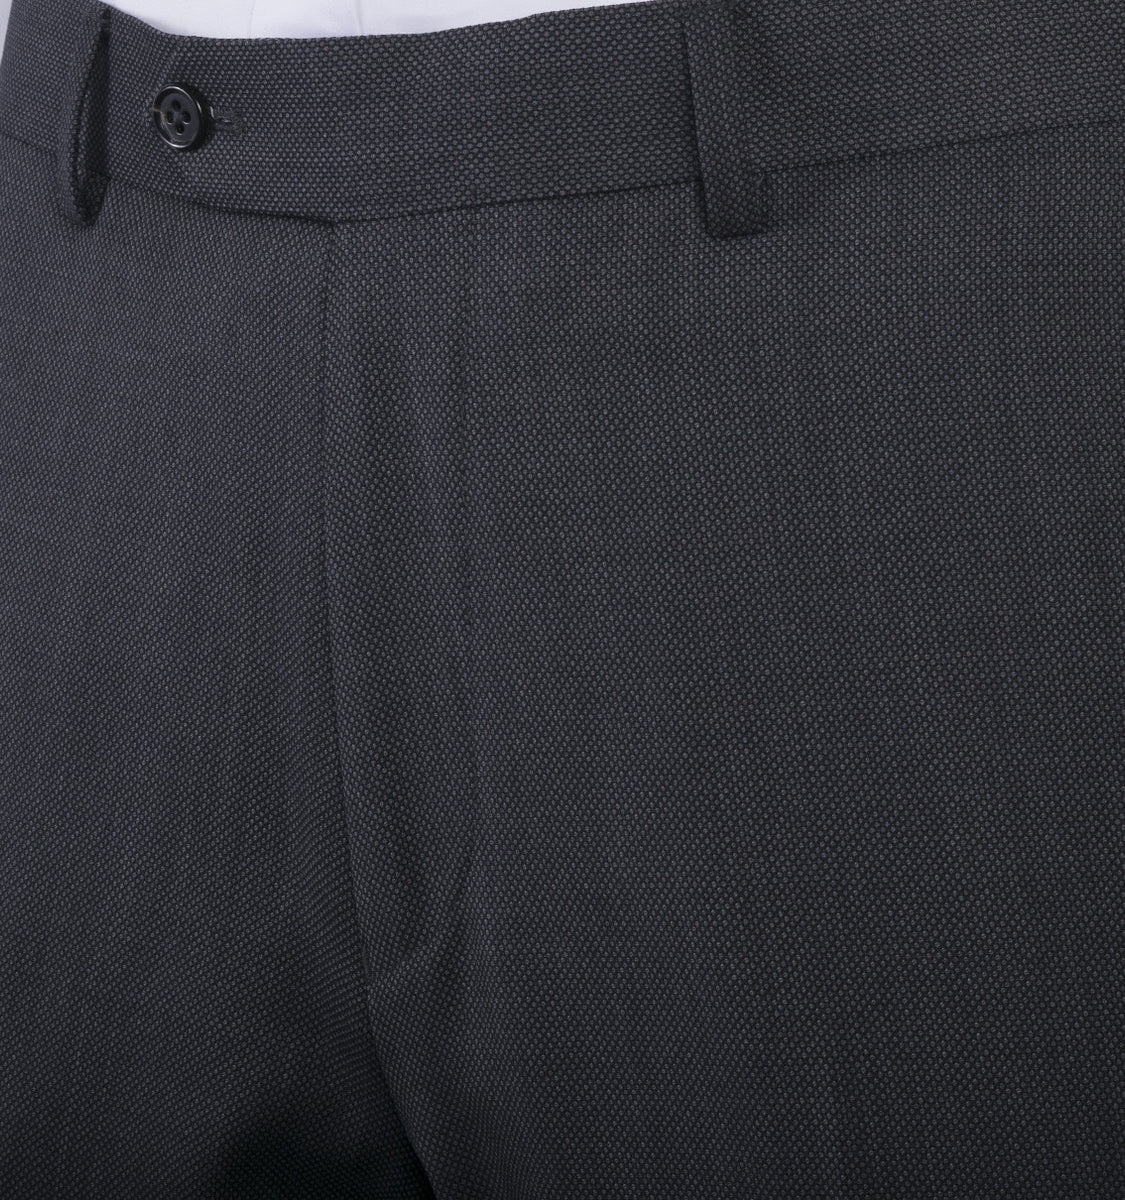 Novello Dark Gray Birdseye Pure Wool Men’s Suit by Tiglio Luxe IDM7018 ...